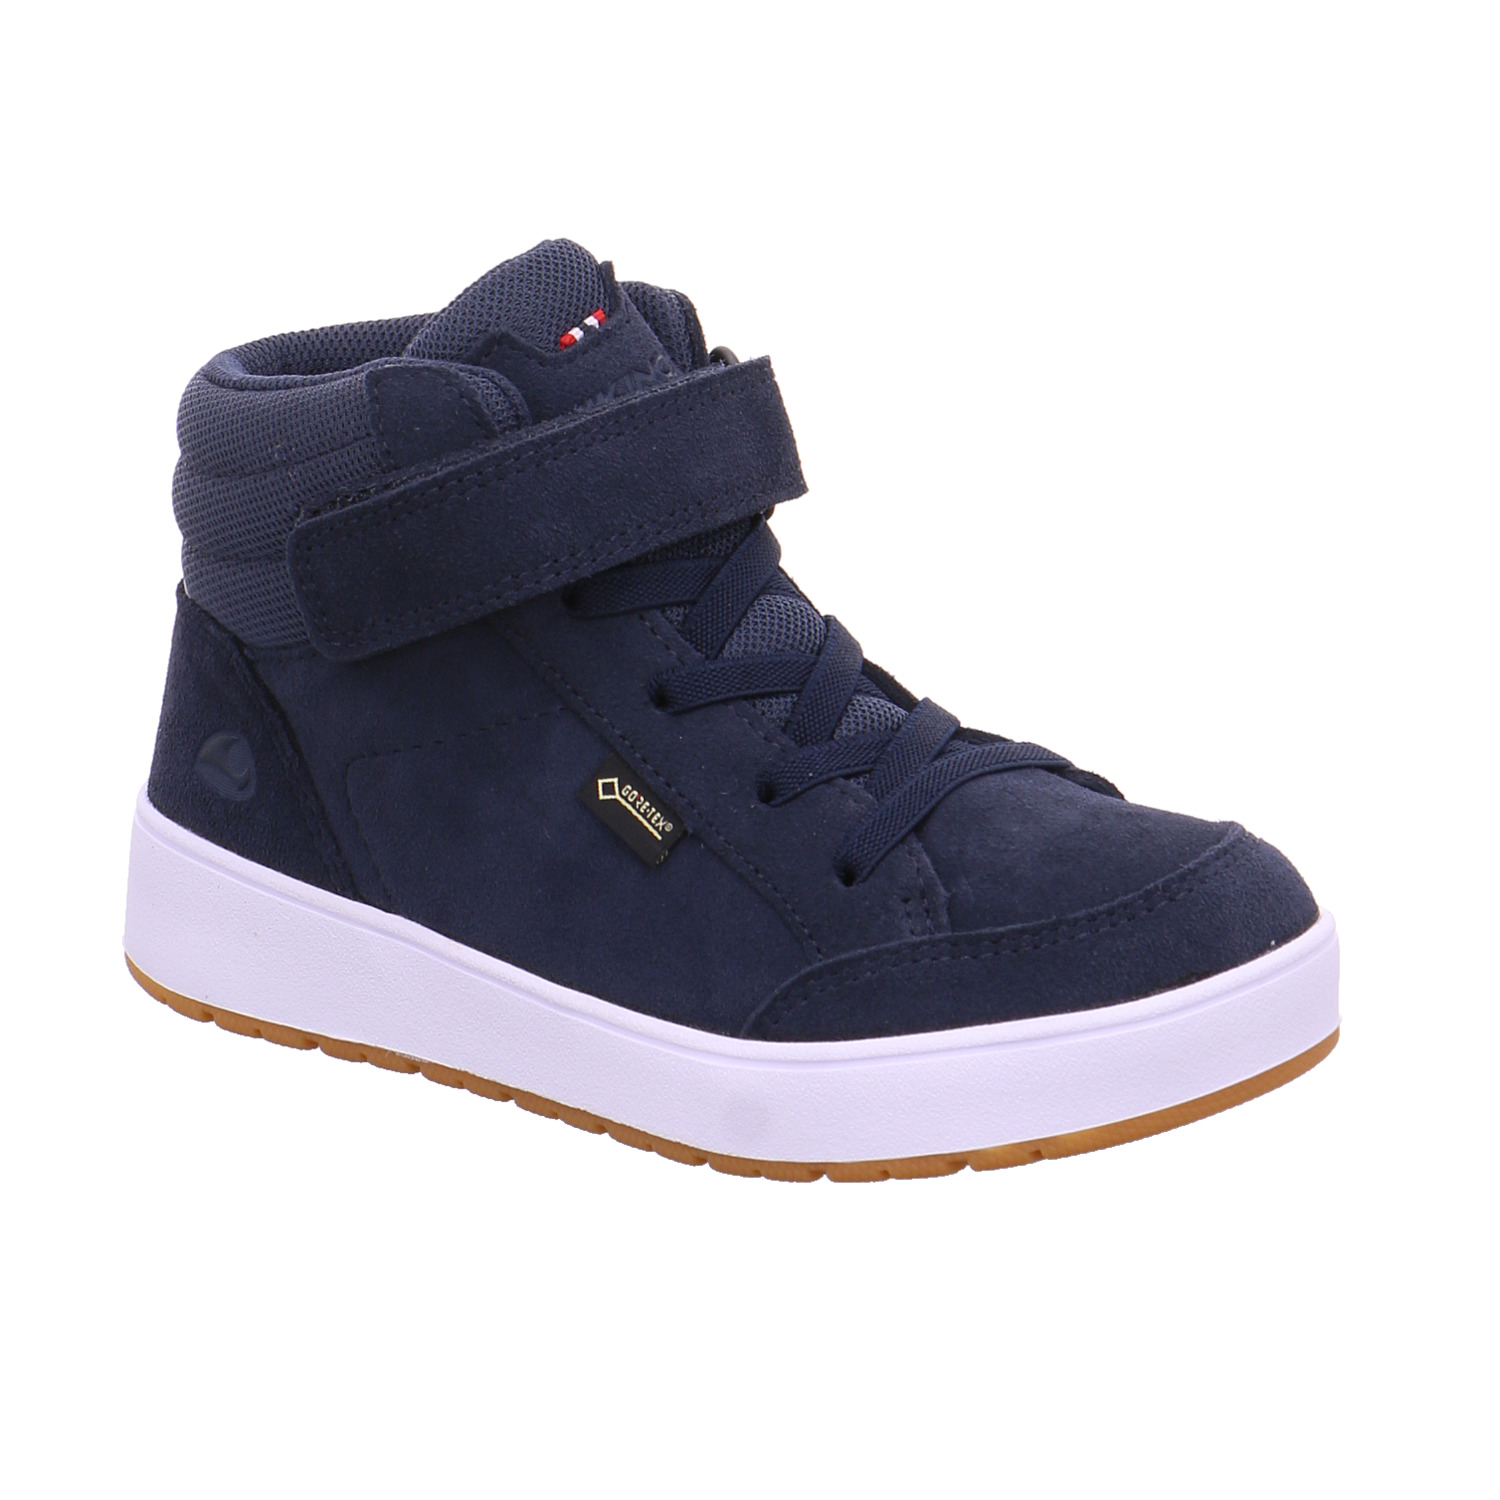 VIKING Jugend-Boot Blau Textil Sneaker high